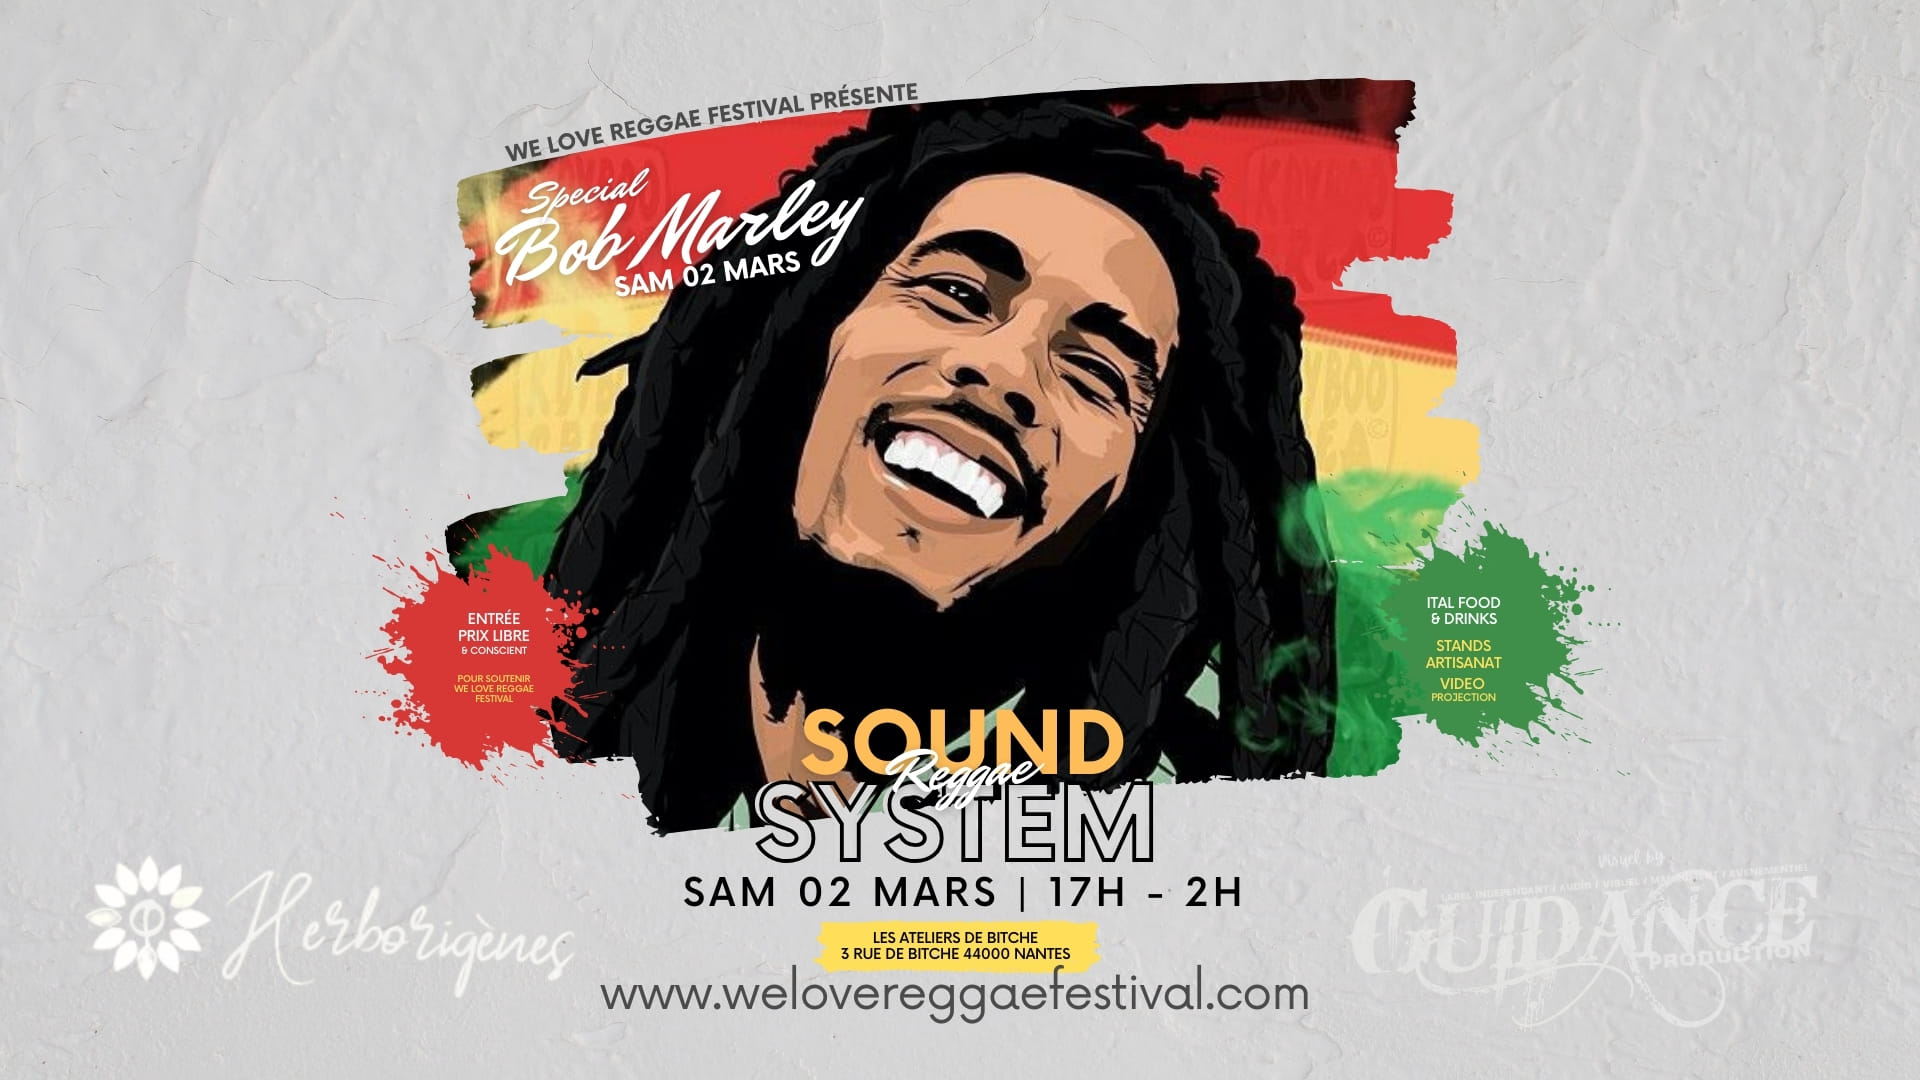 reggae-sound-system-bob-marley